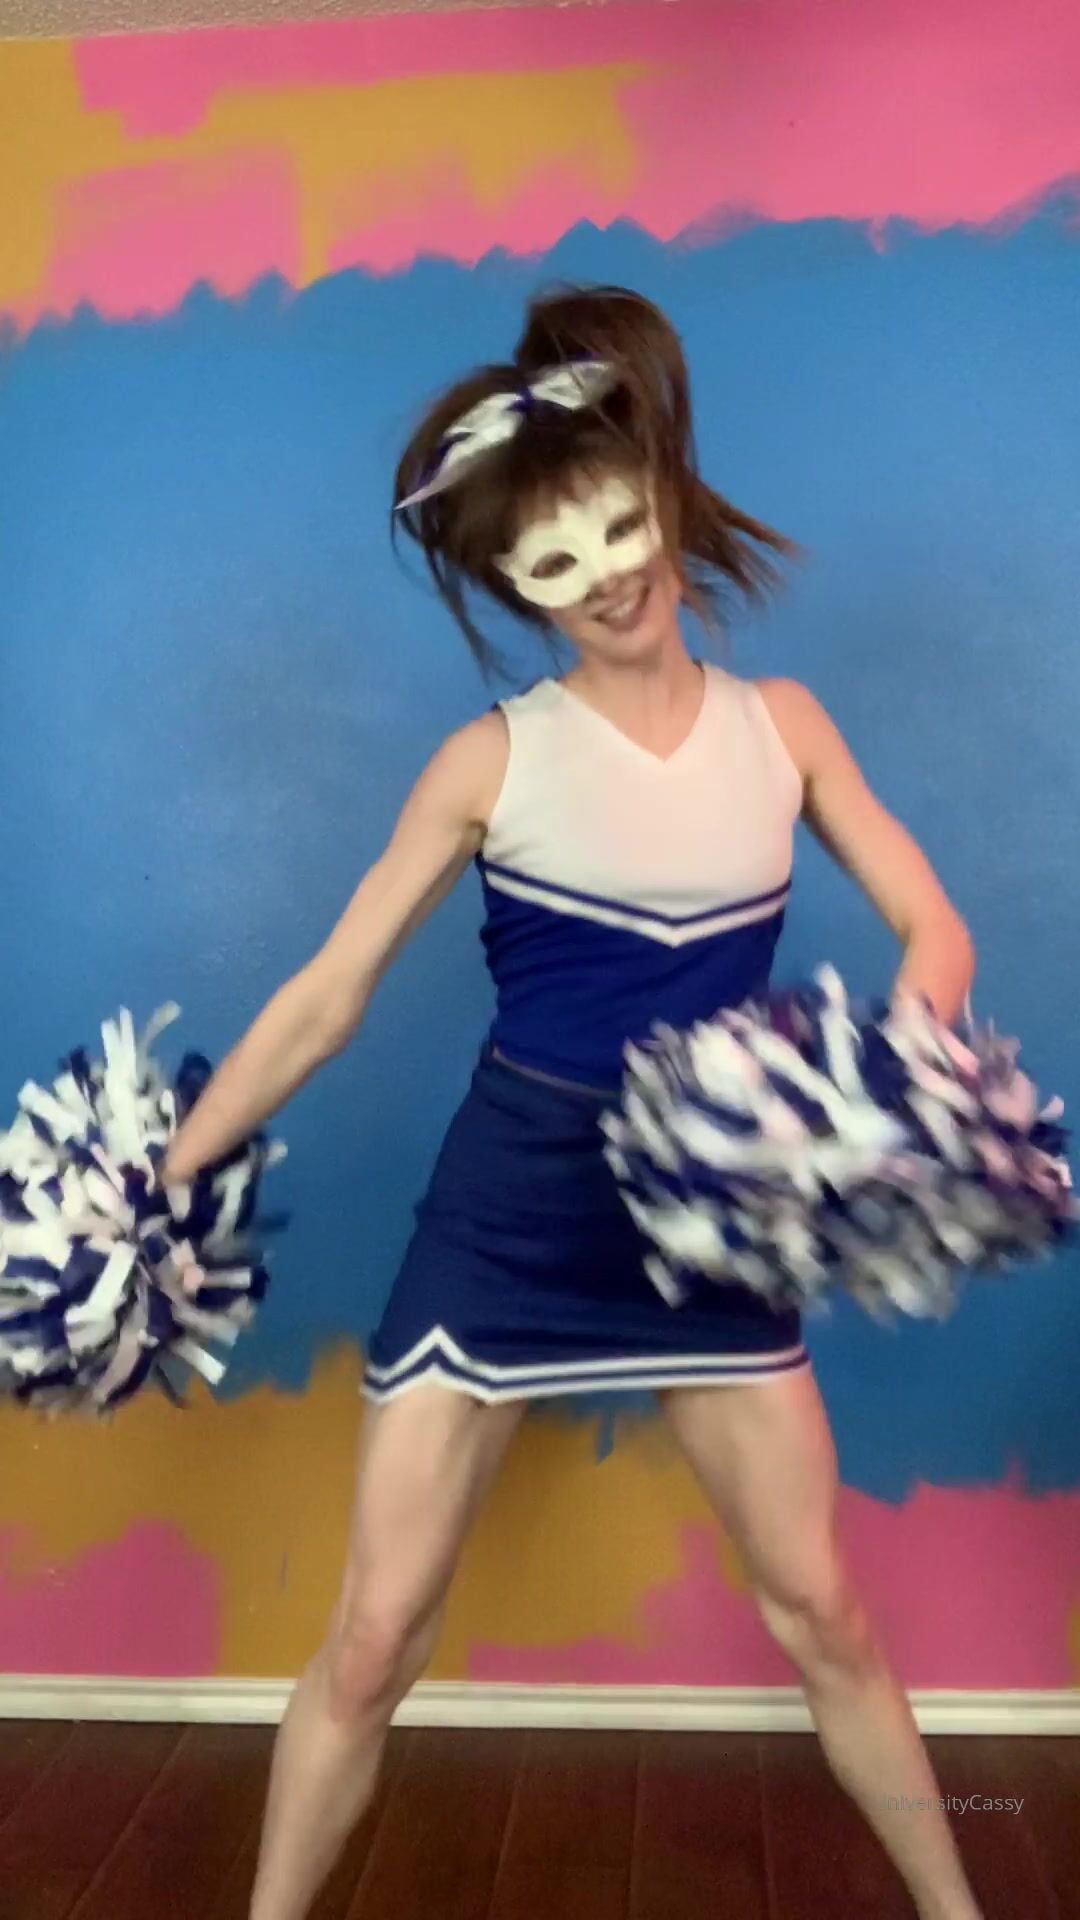 UniversityCassy - OnlyFans I wanna be your Cheerleader